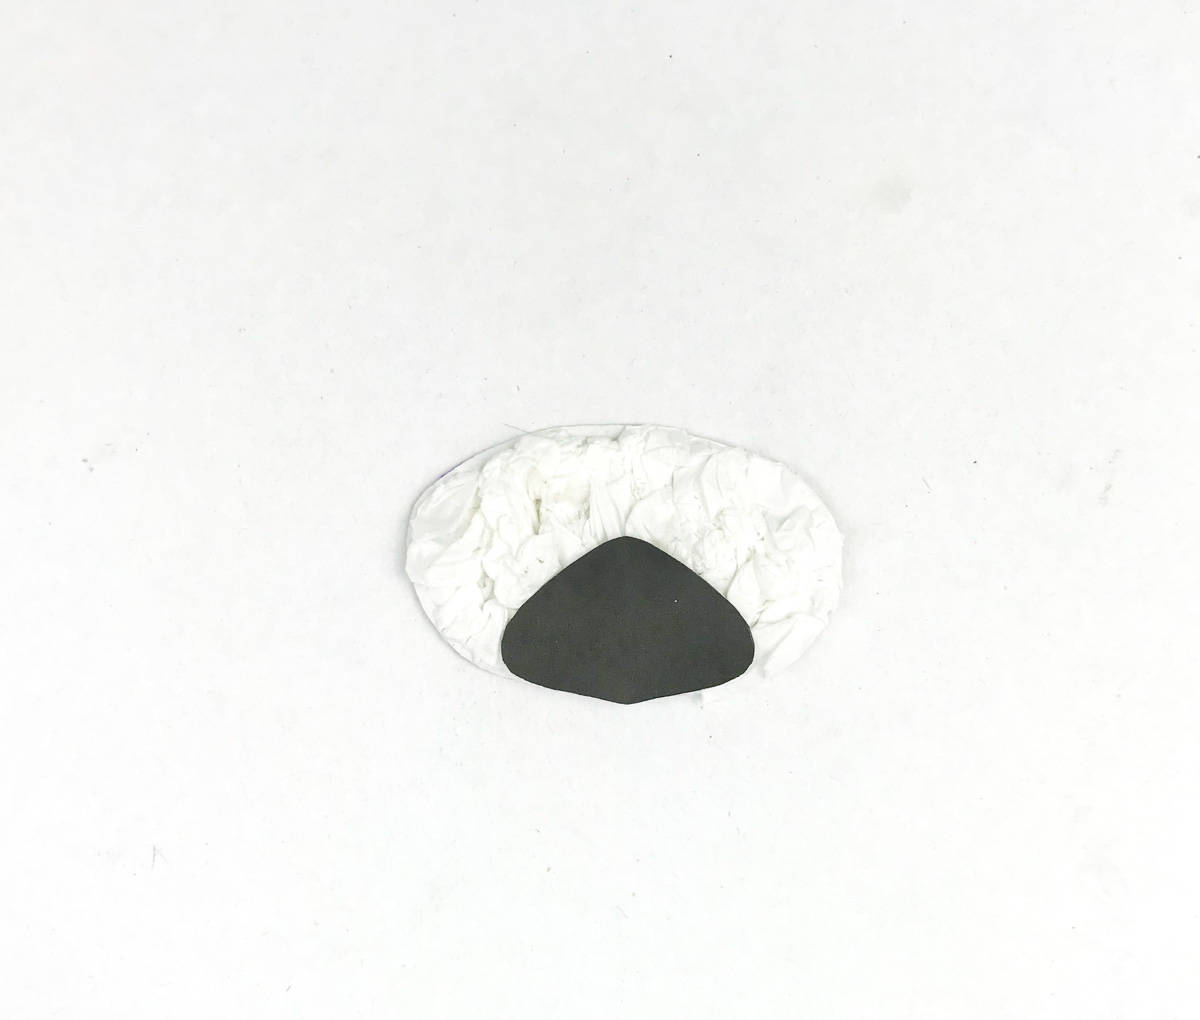 glue tissue paper to polar bear snout